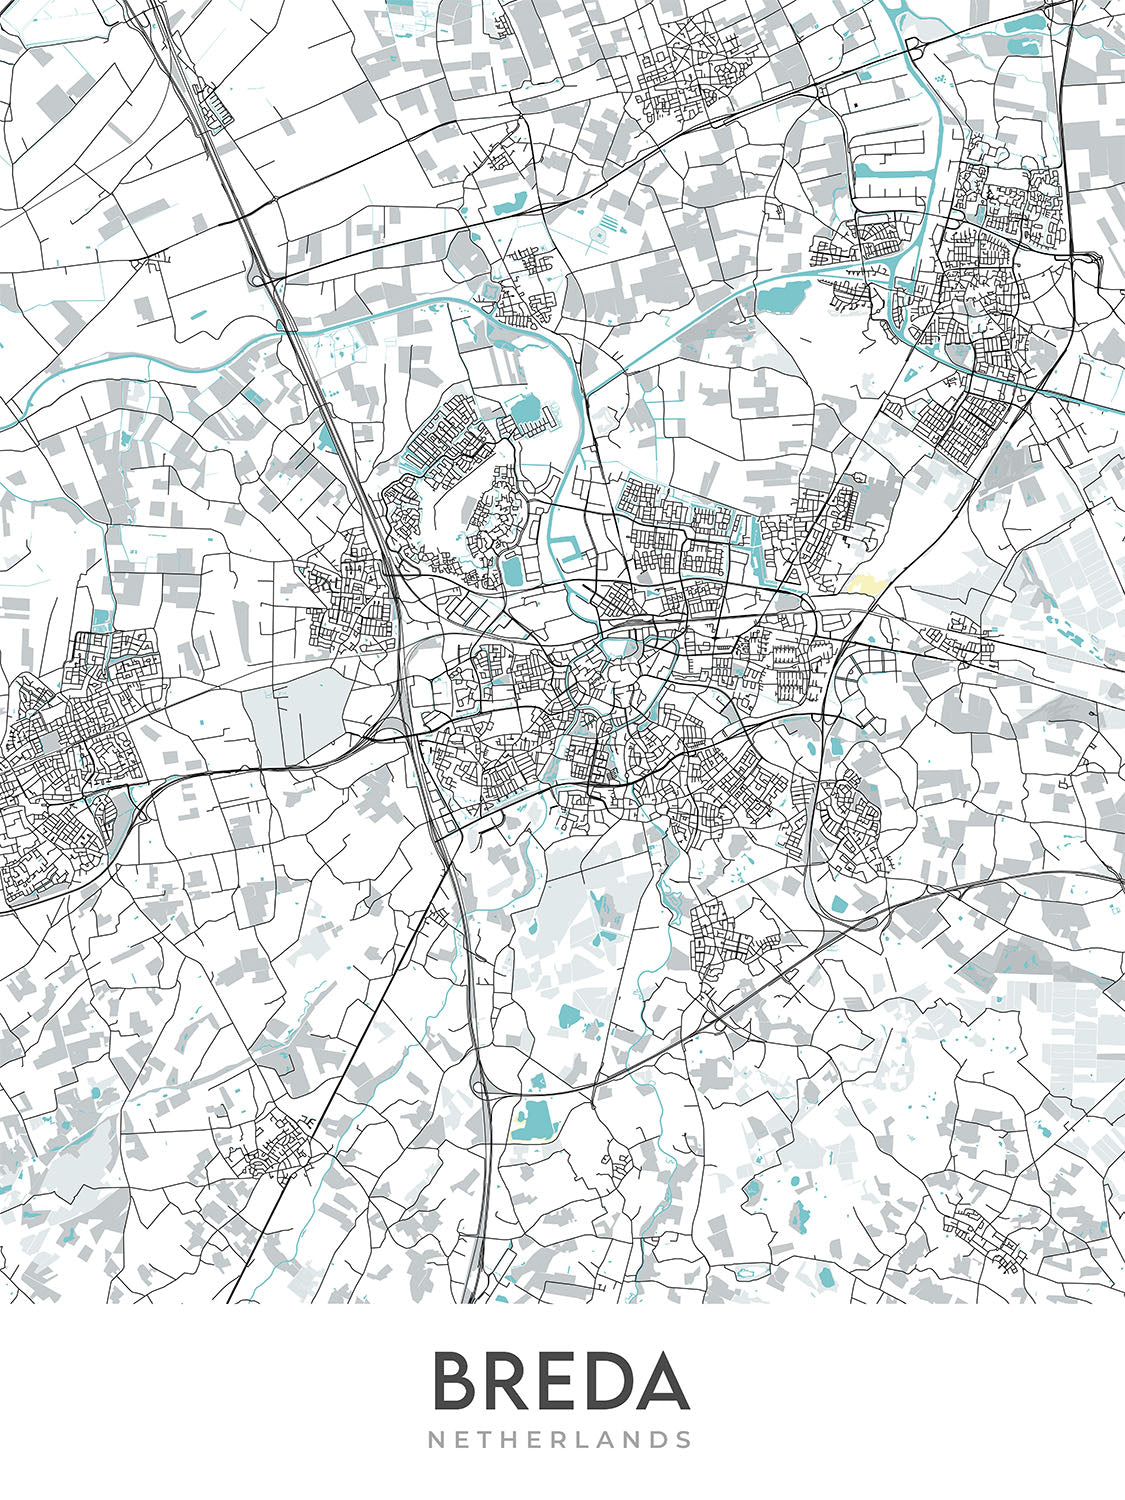 Plan de la ville moderne de Breda, Pays-Bas : Grote Kerk, Kasteel van Breda, Stedelijk Museum Breda, A16, A27